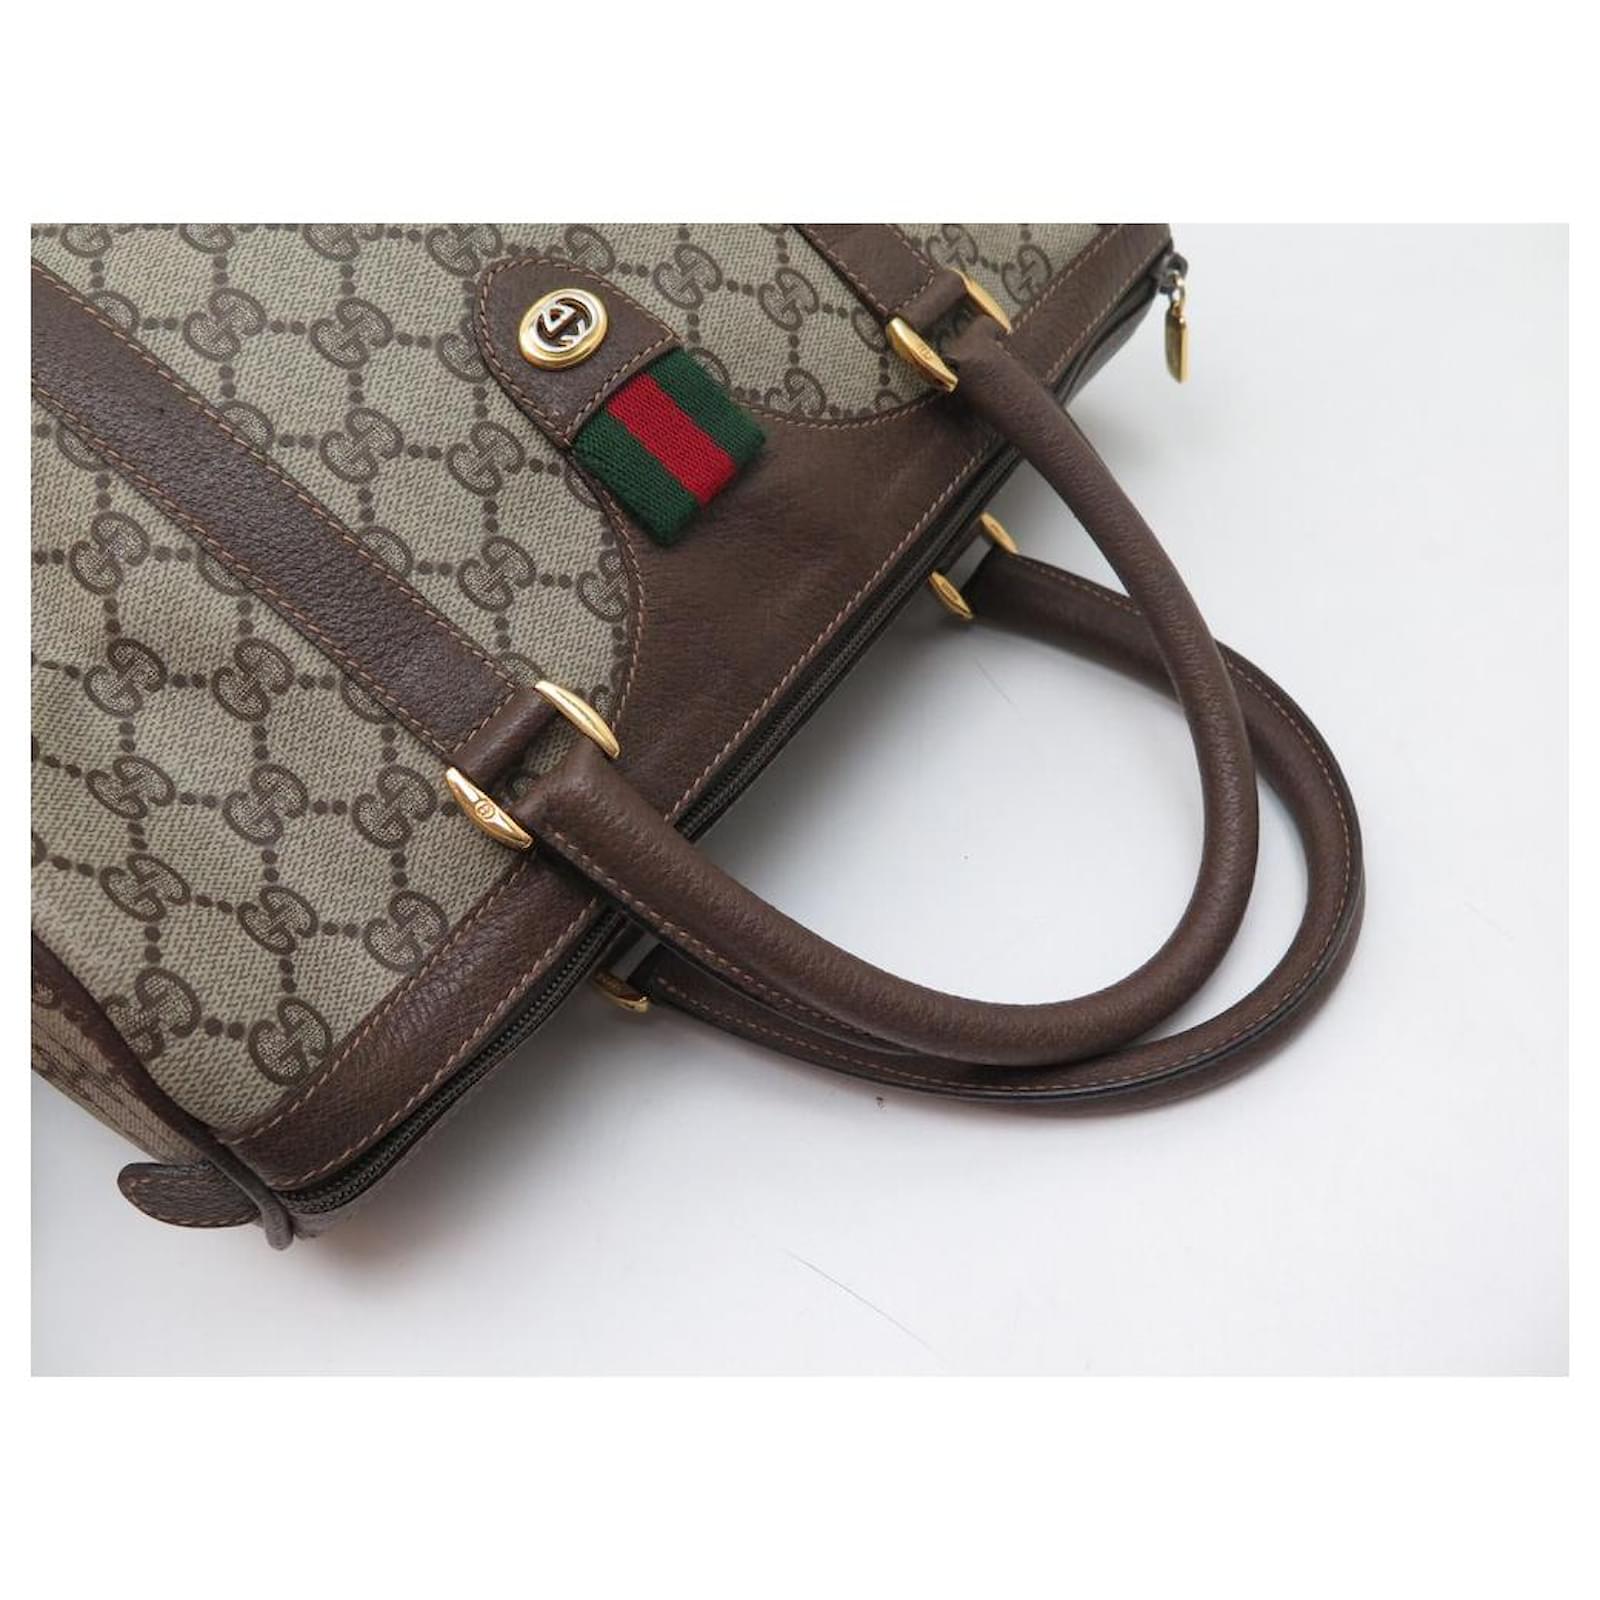 Gucci Boston Handbag 370932